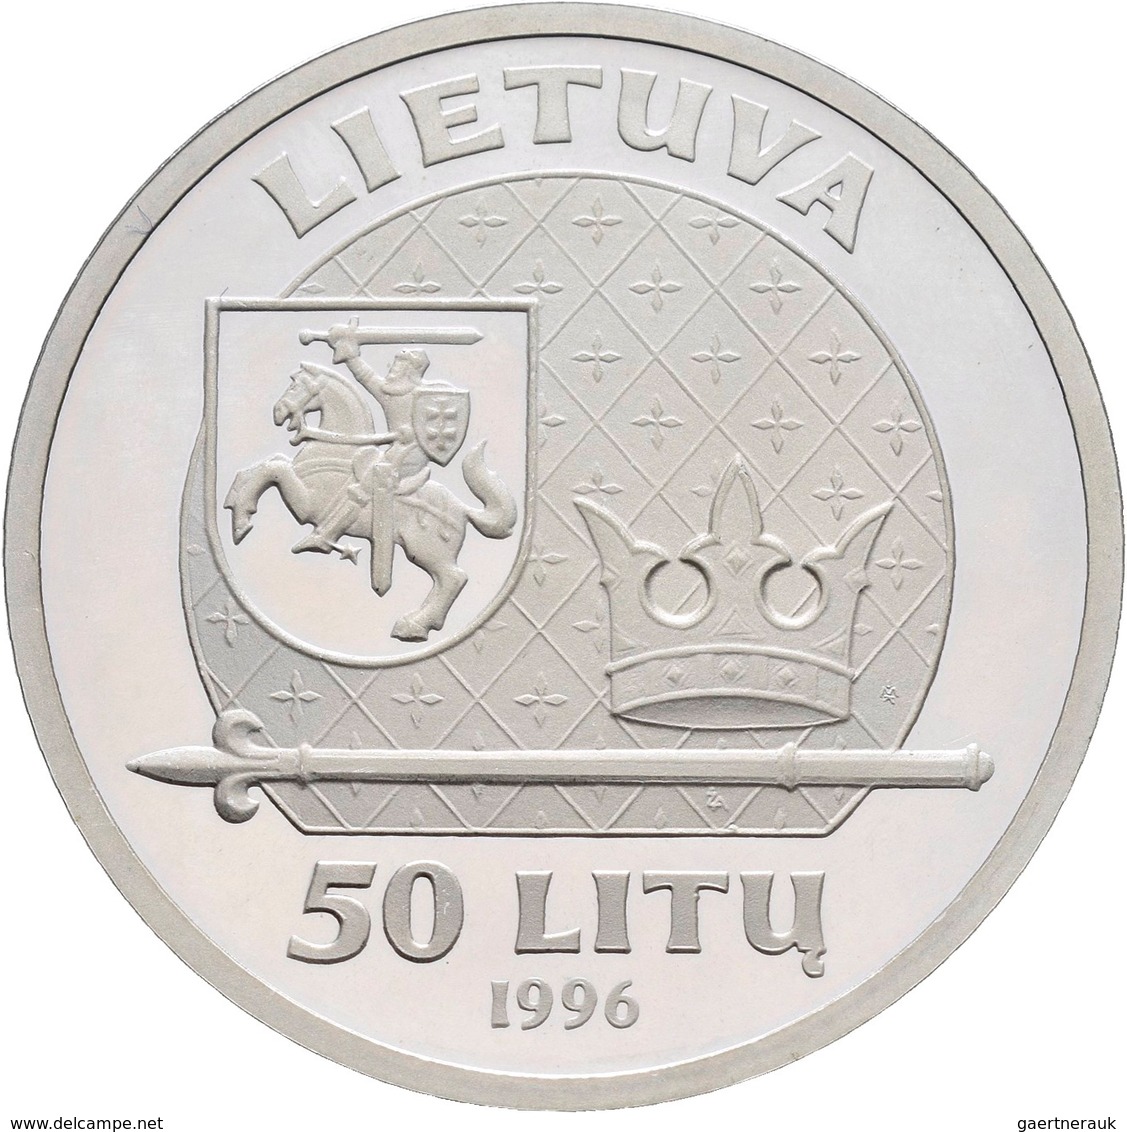 Litauen: 50 Litu 1996, König Mindaugas. KM# 102. In Kapsel, Ohne Etui/Zertifikat, Polierte Platte. - Litouwen